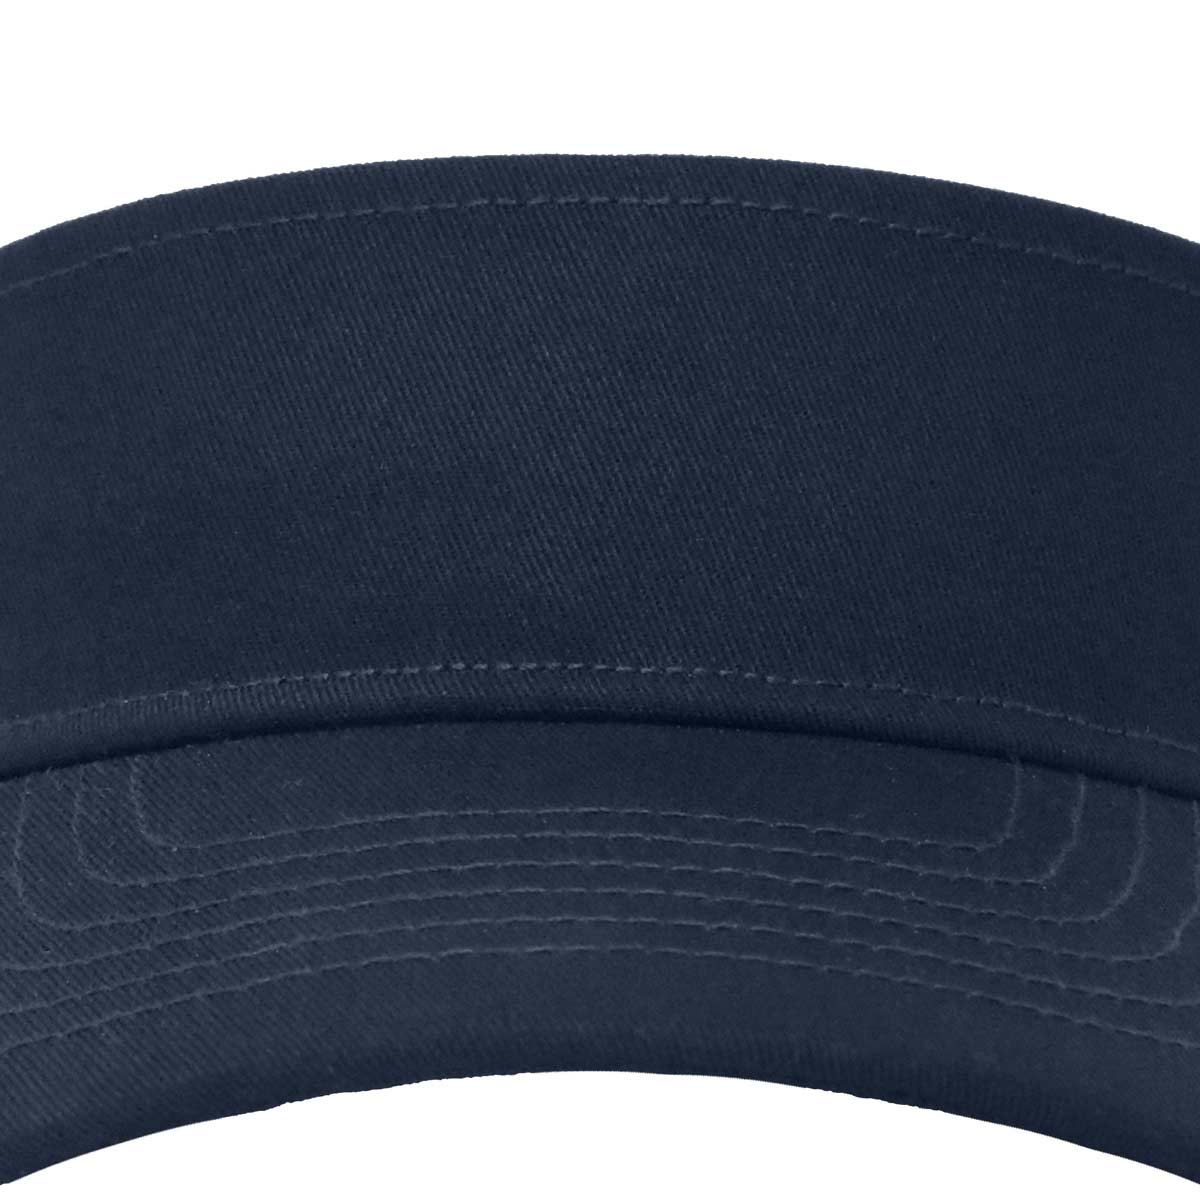 Dalix Visor Hat Adjustable Cotton Men Women Classic in Navy Blue